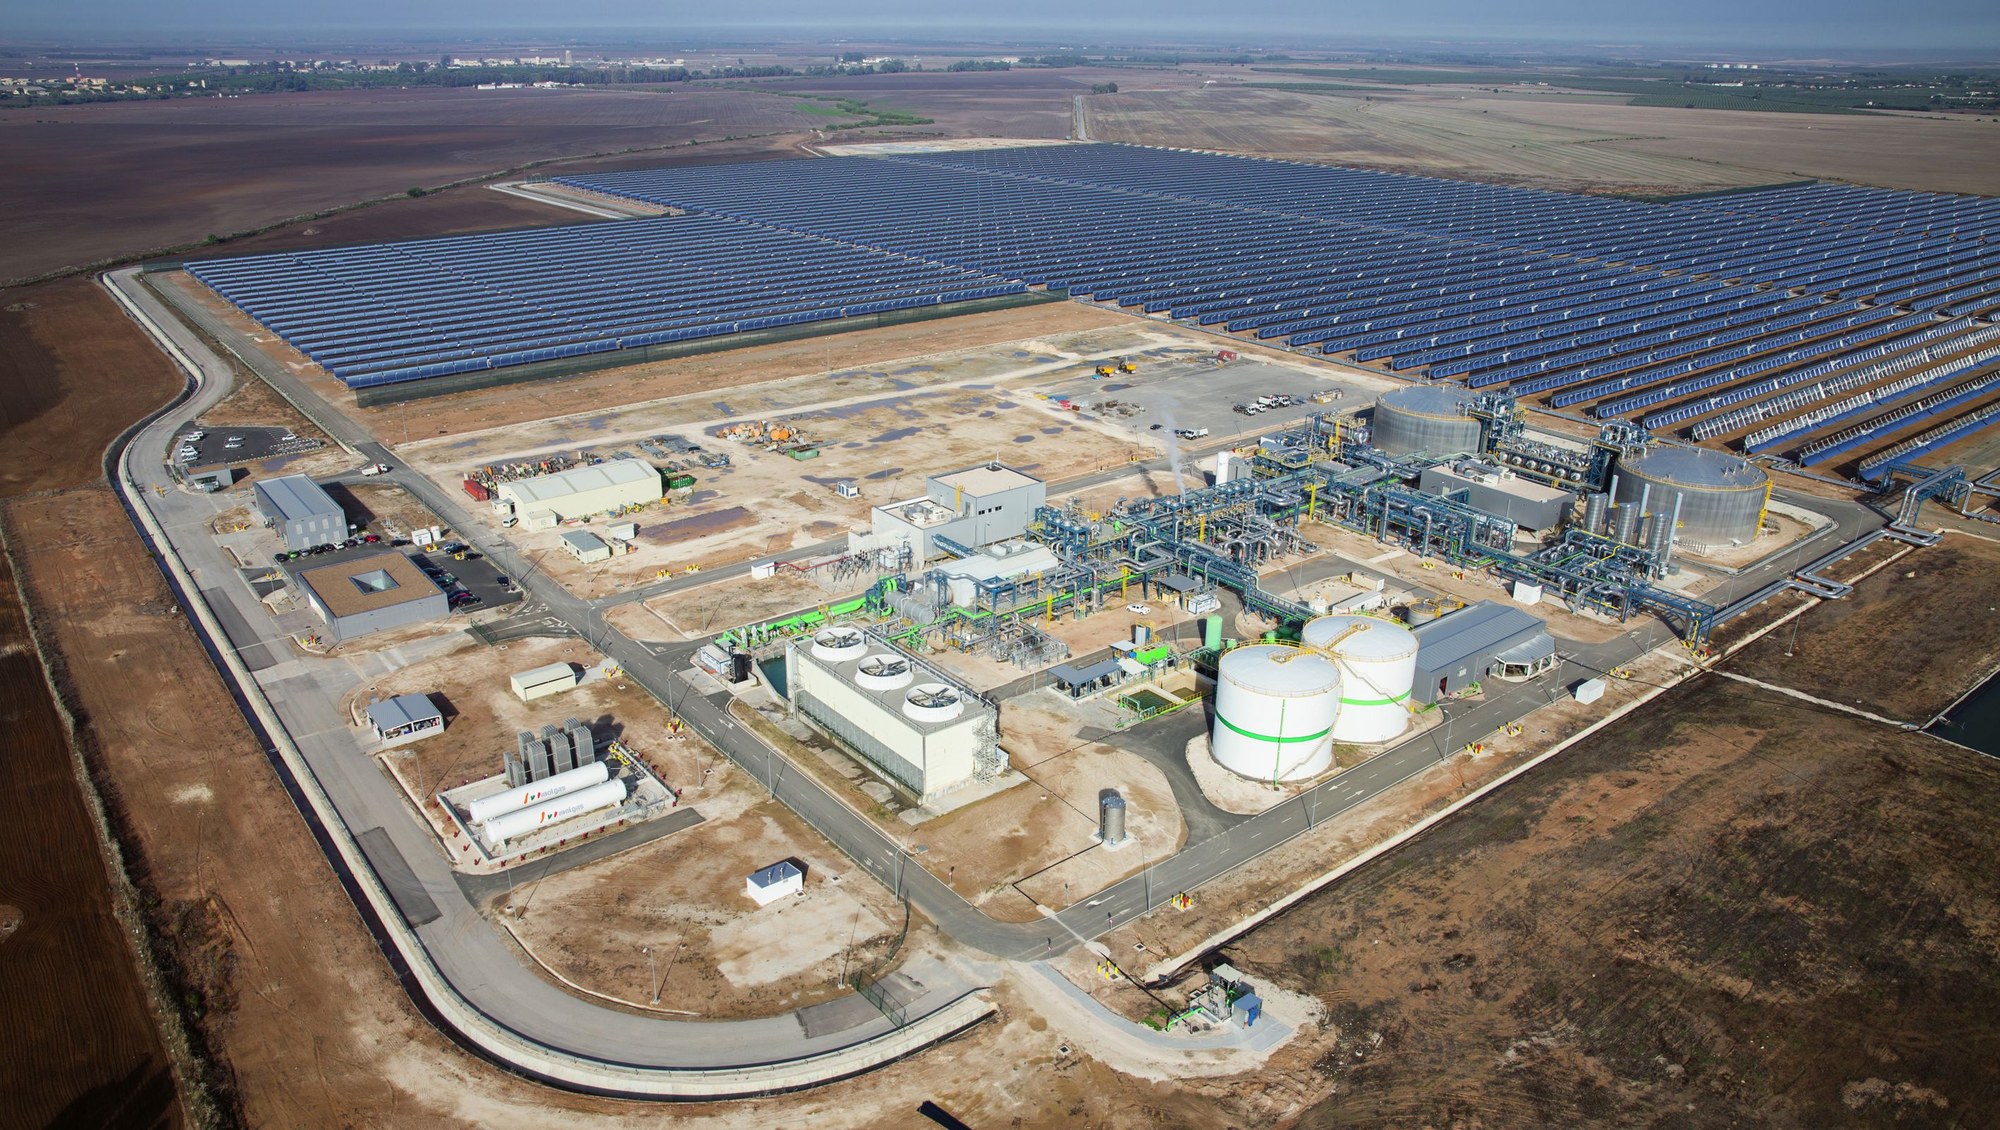 Solarkraftwerk Arenales in Spanien